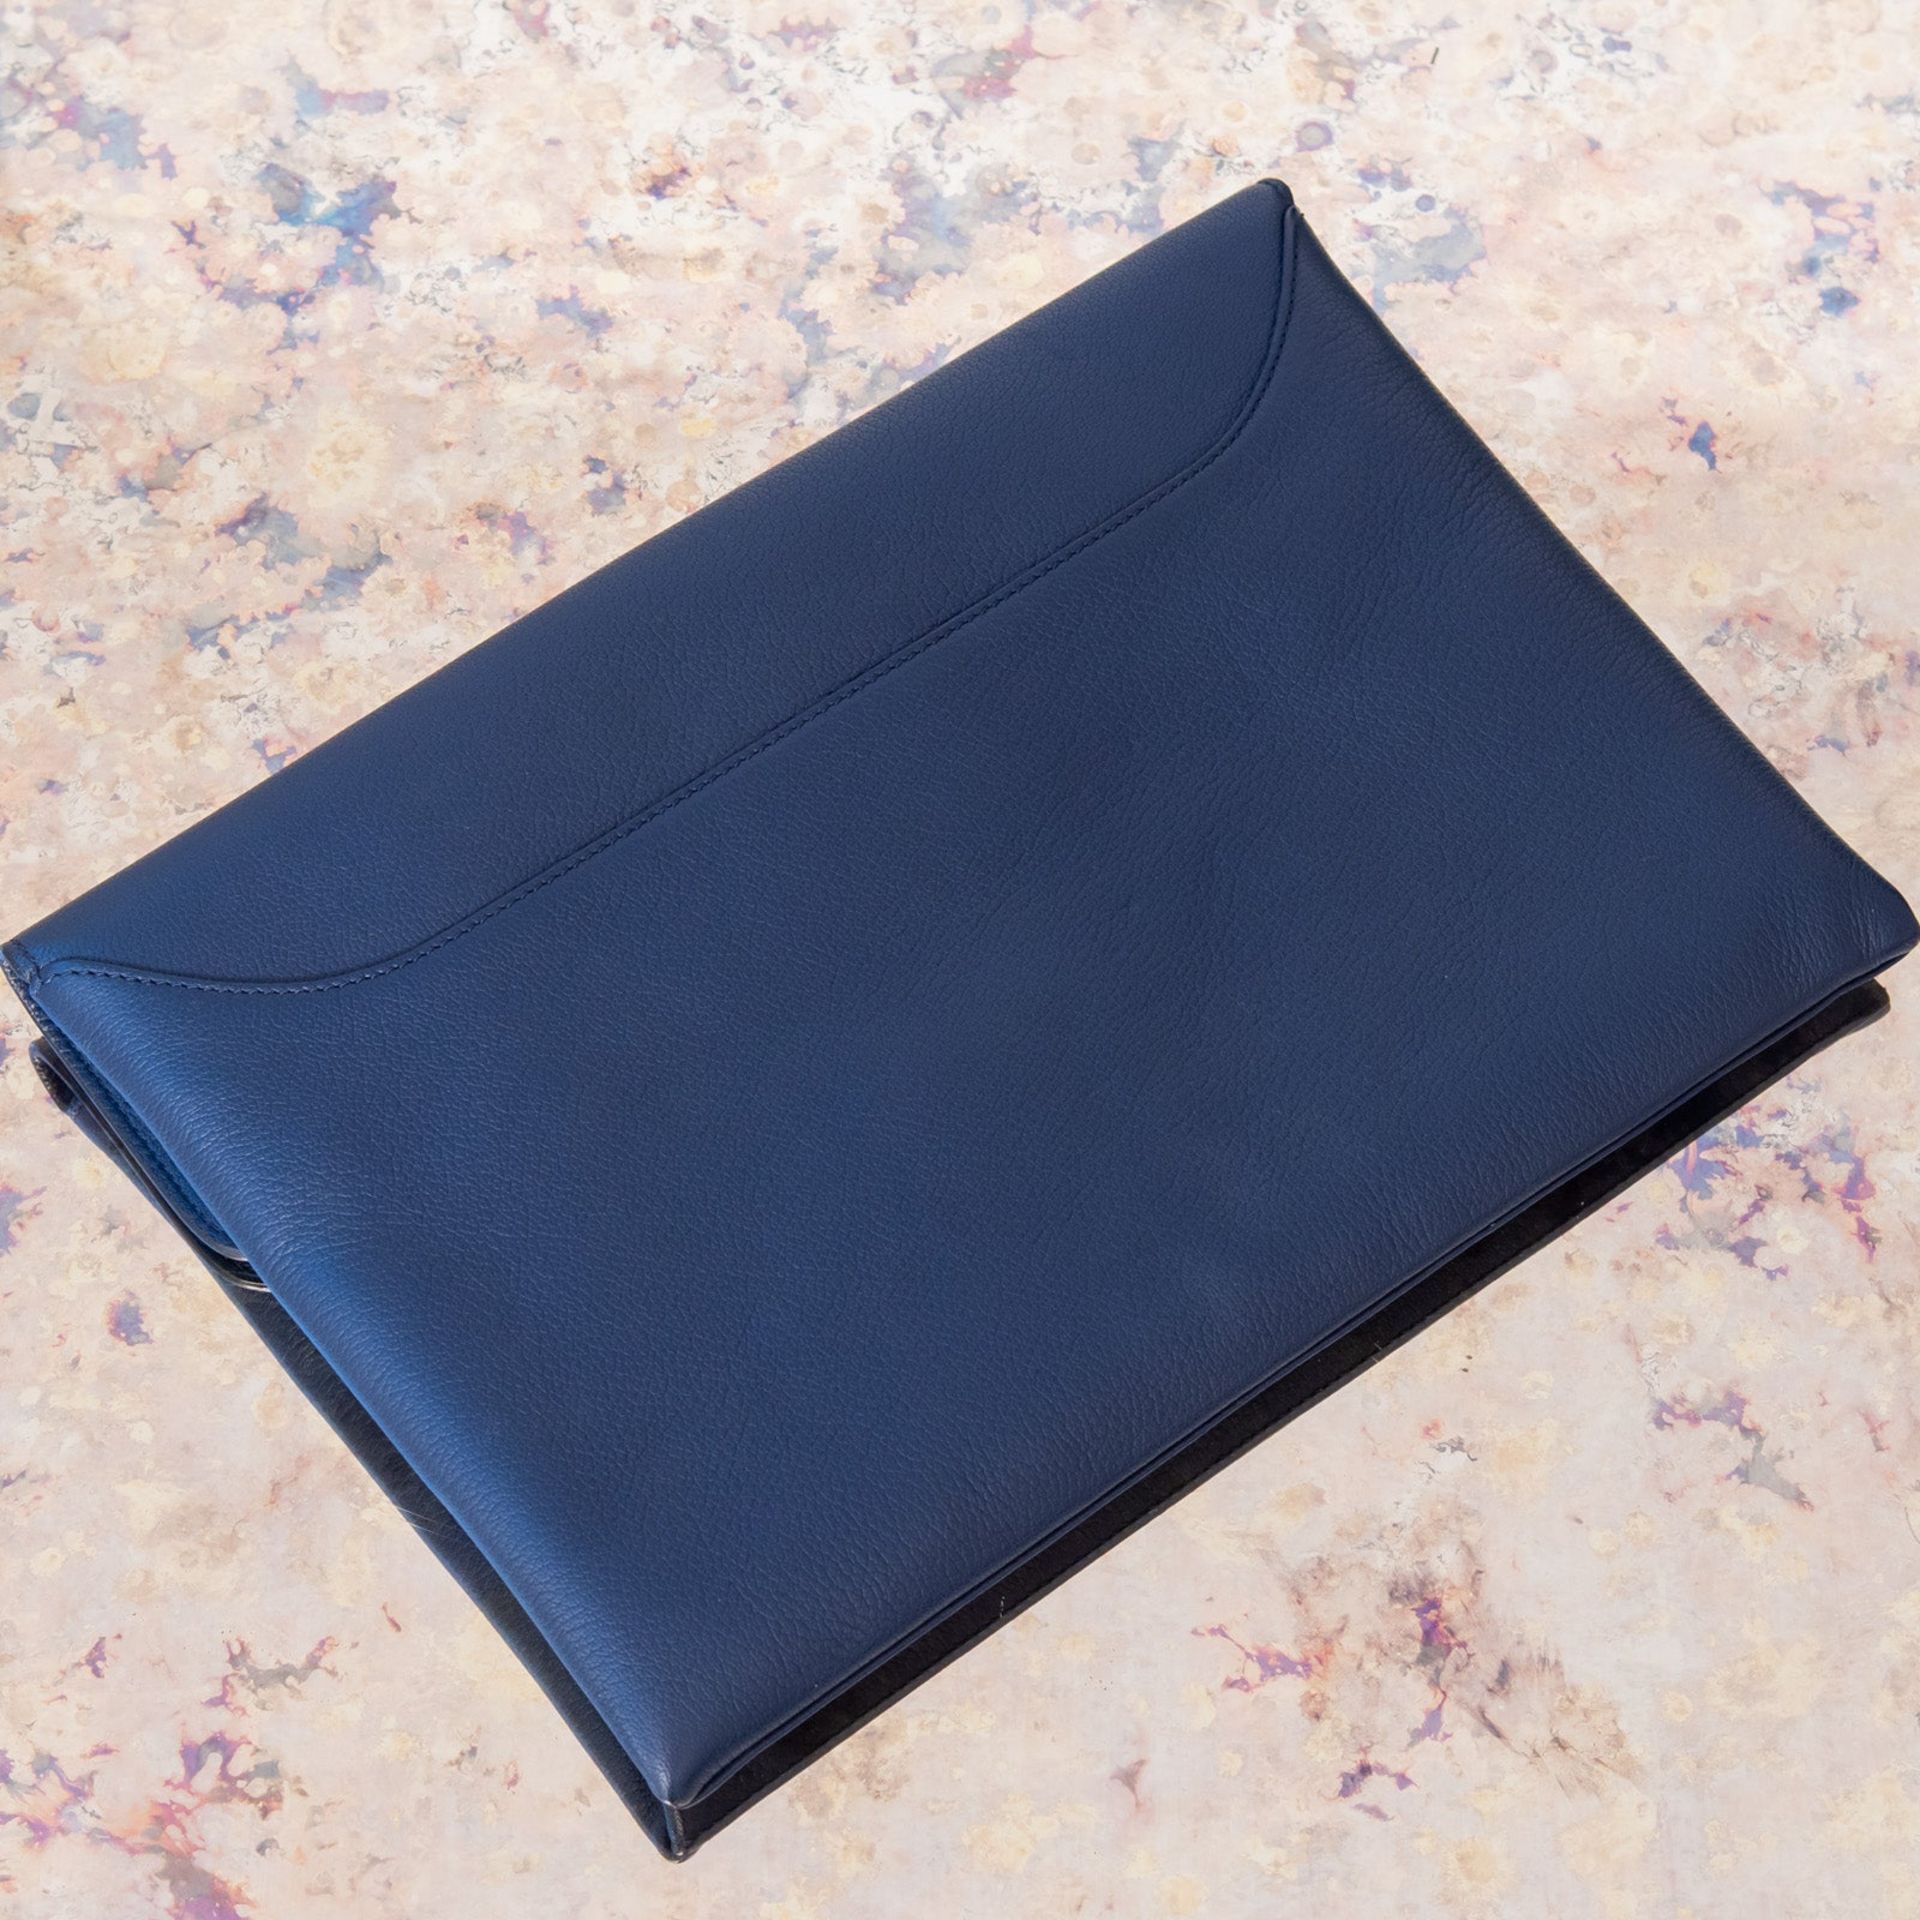 Givenchy Blue Leather Envelope Flap Bag - Image 4 of 6